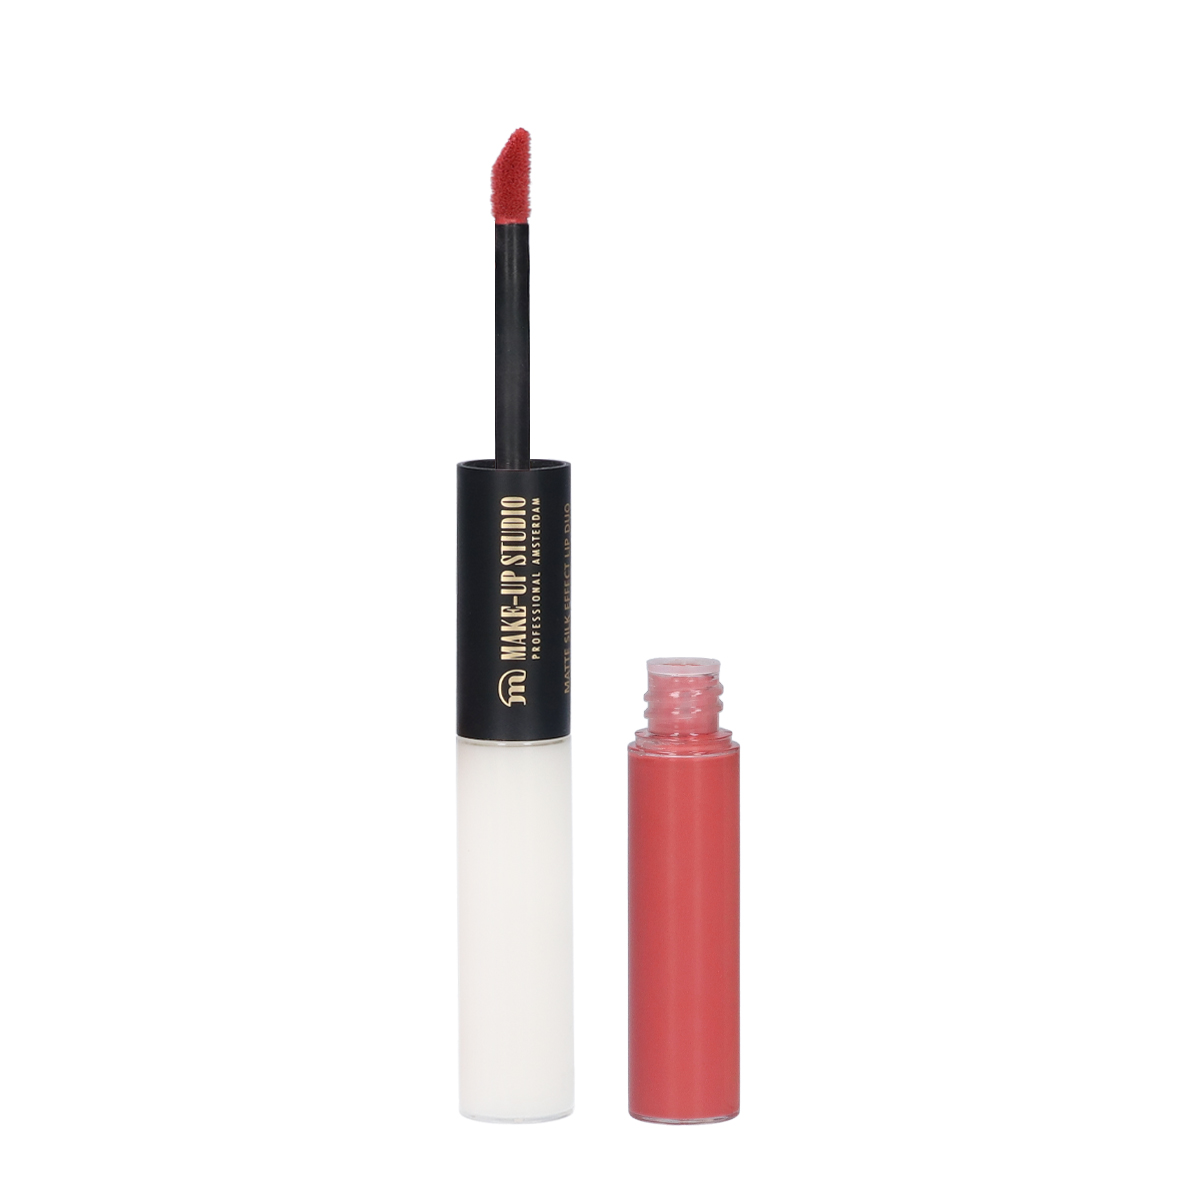 Make-up Studio Matte Silk Effect Lip Duo Lipstick - Charming Coral